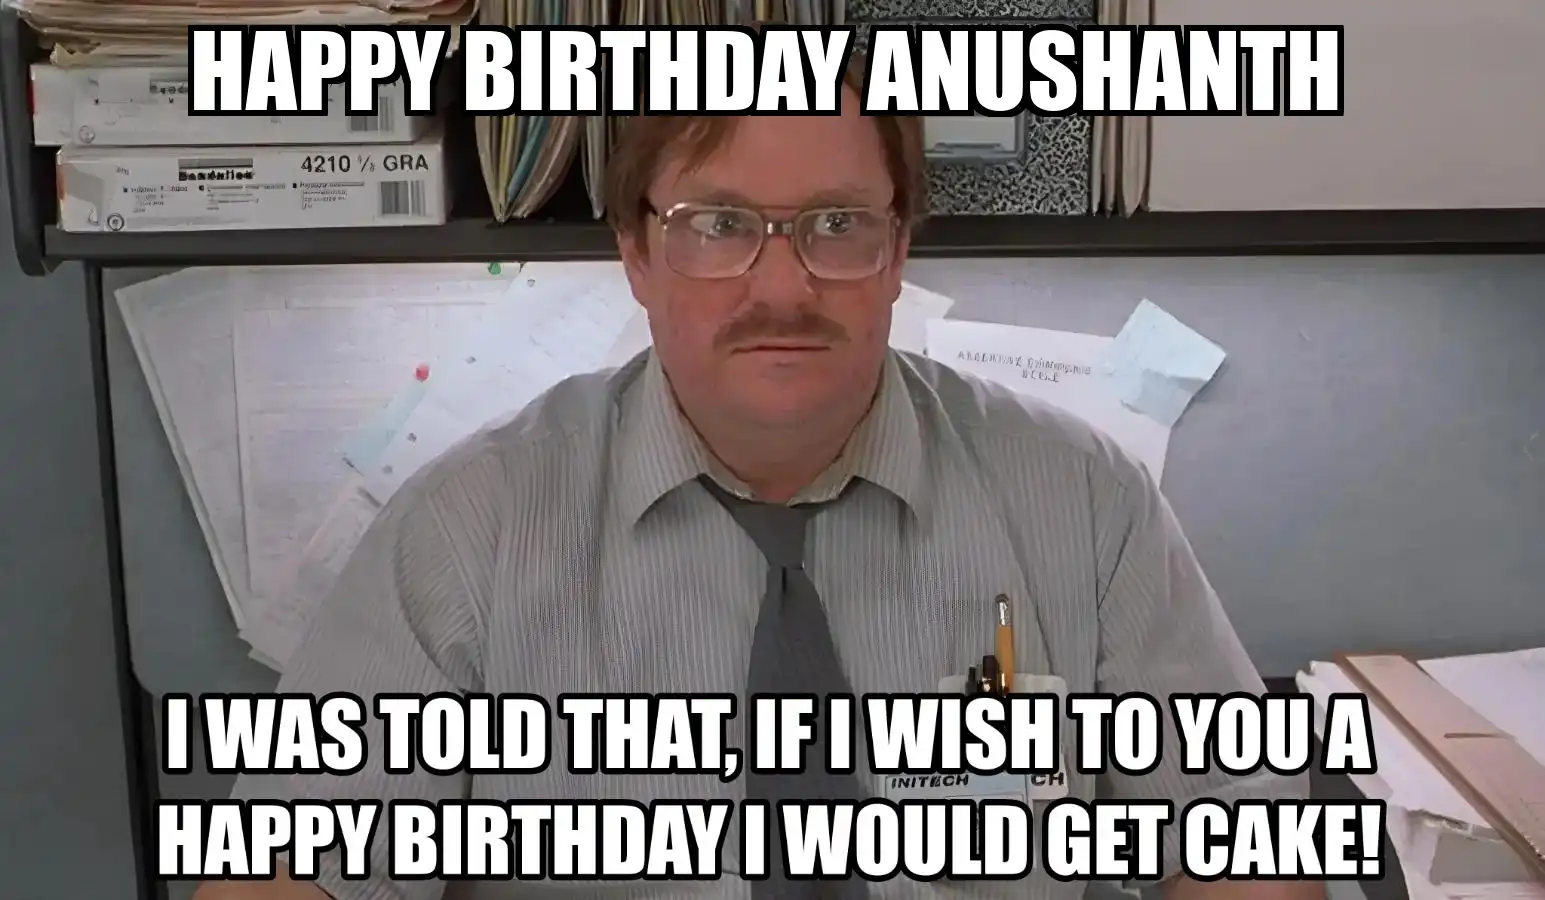 Happy Birthday Anushanth I Would Get A Cake Meme